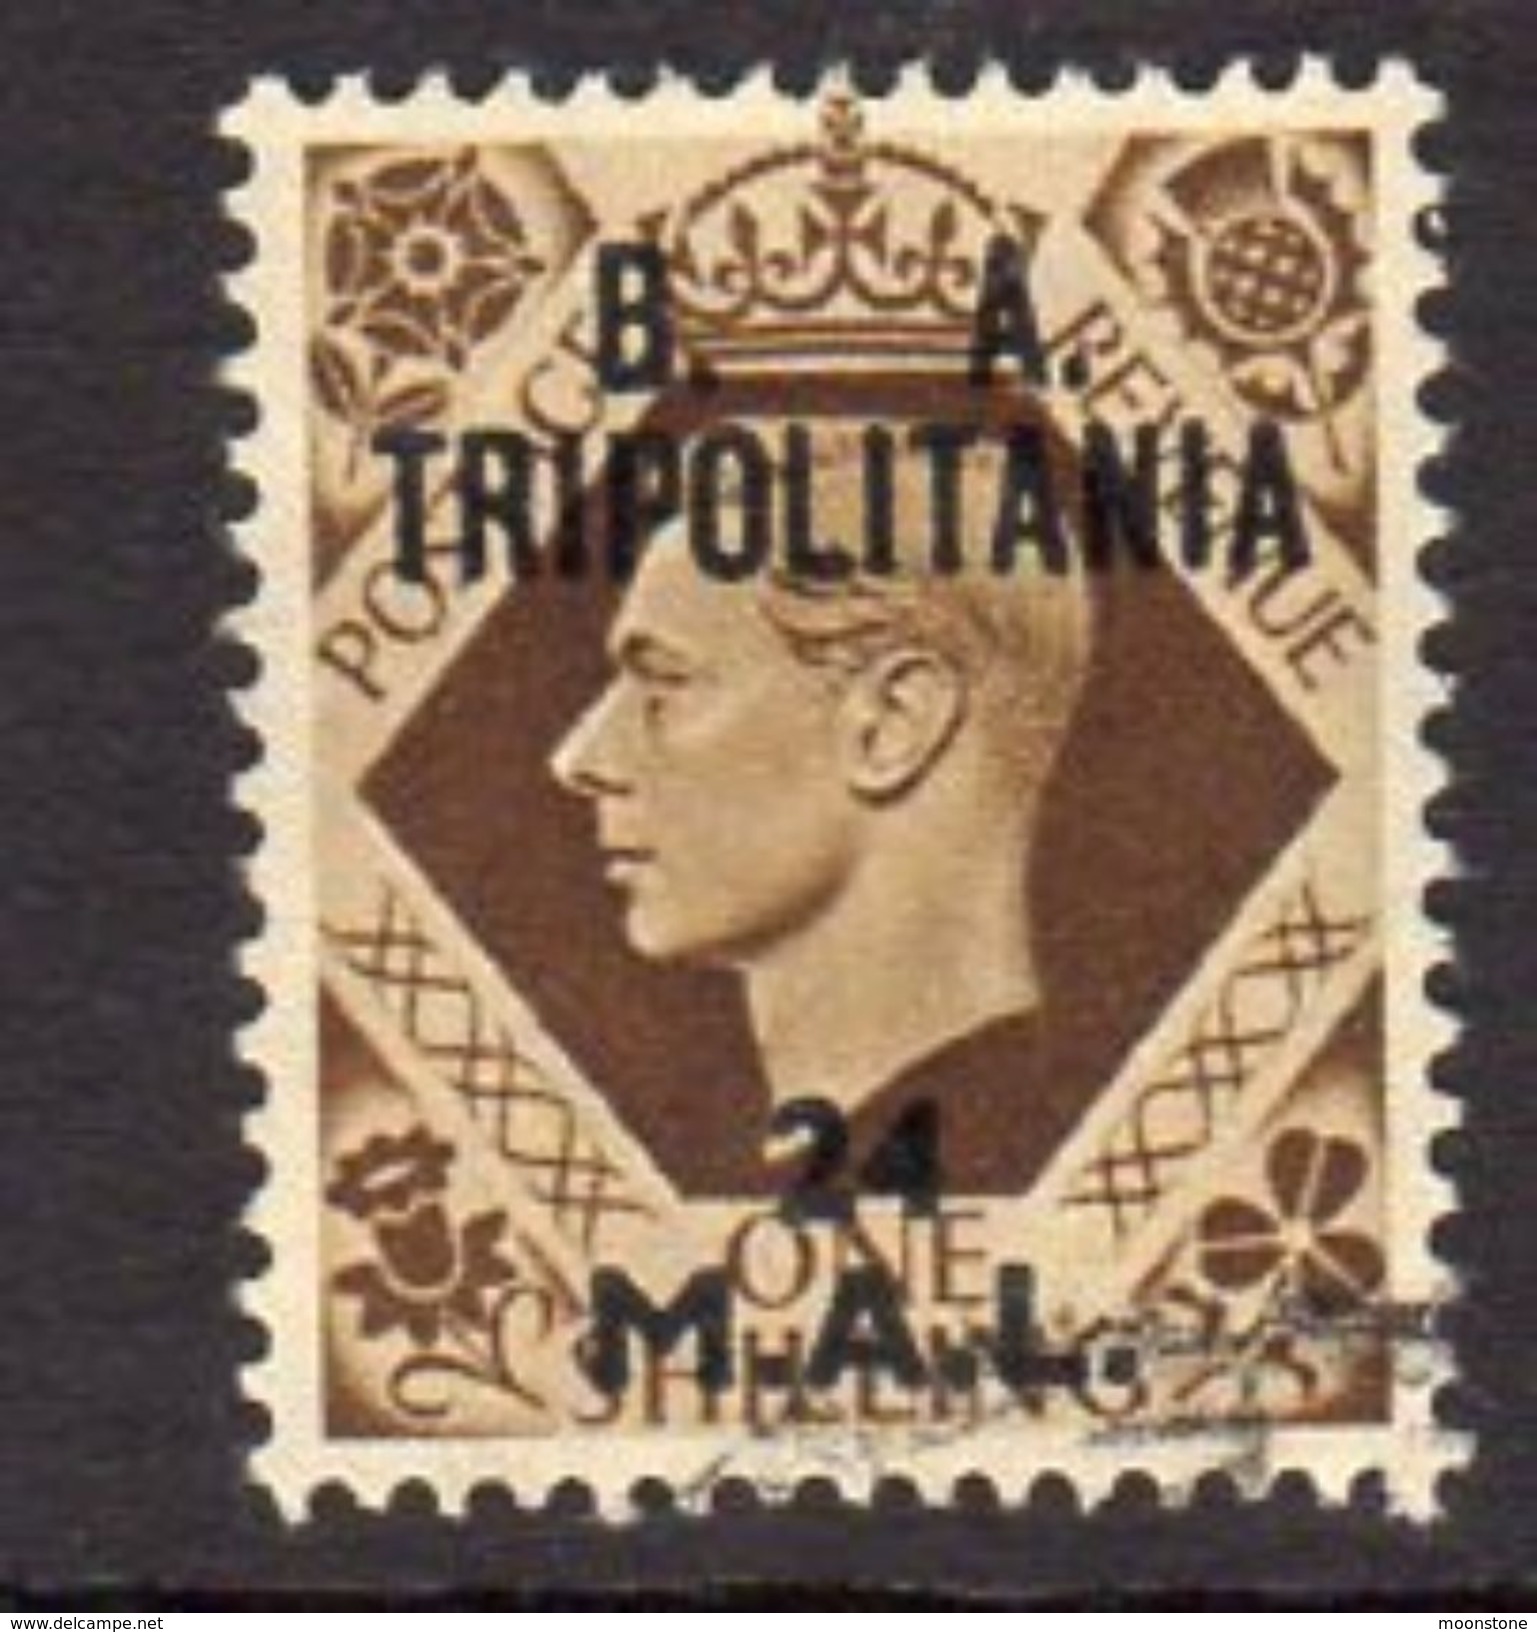 BOIC, BA Tripolitania 1950 24l. On 1/- Overprint On GB, Used, SG T23 (A) - Tripolitaine